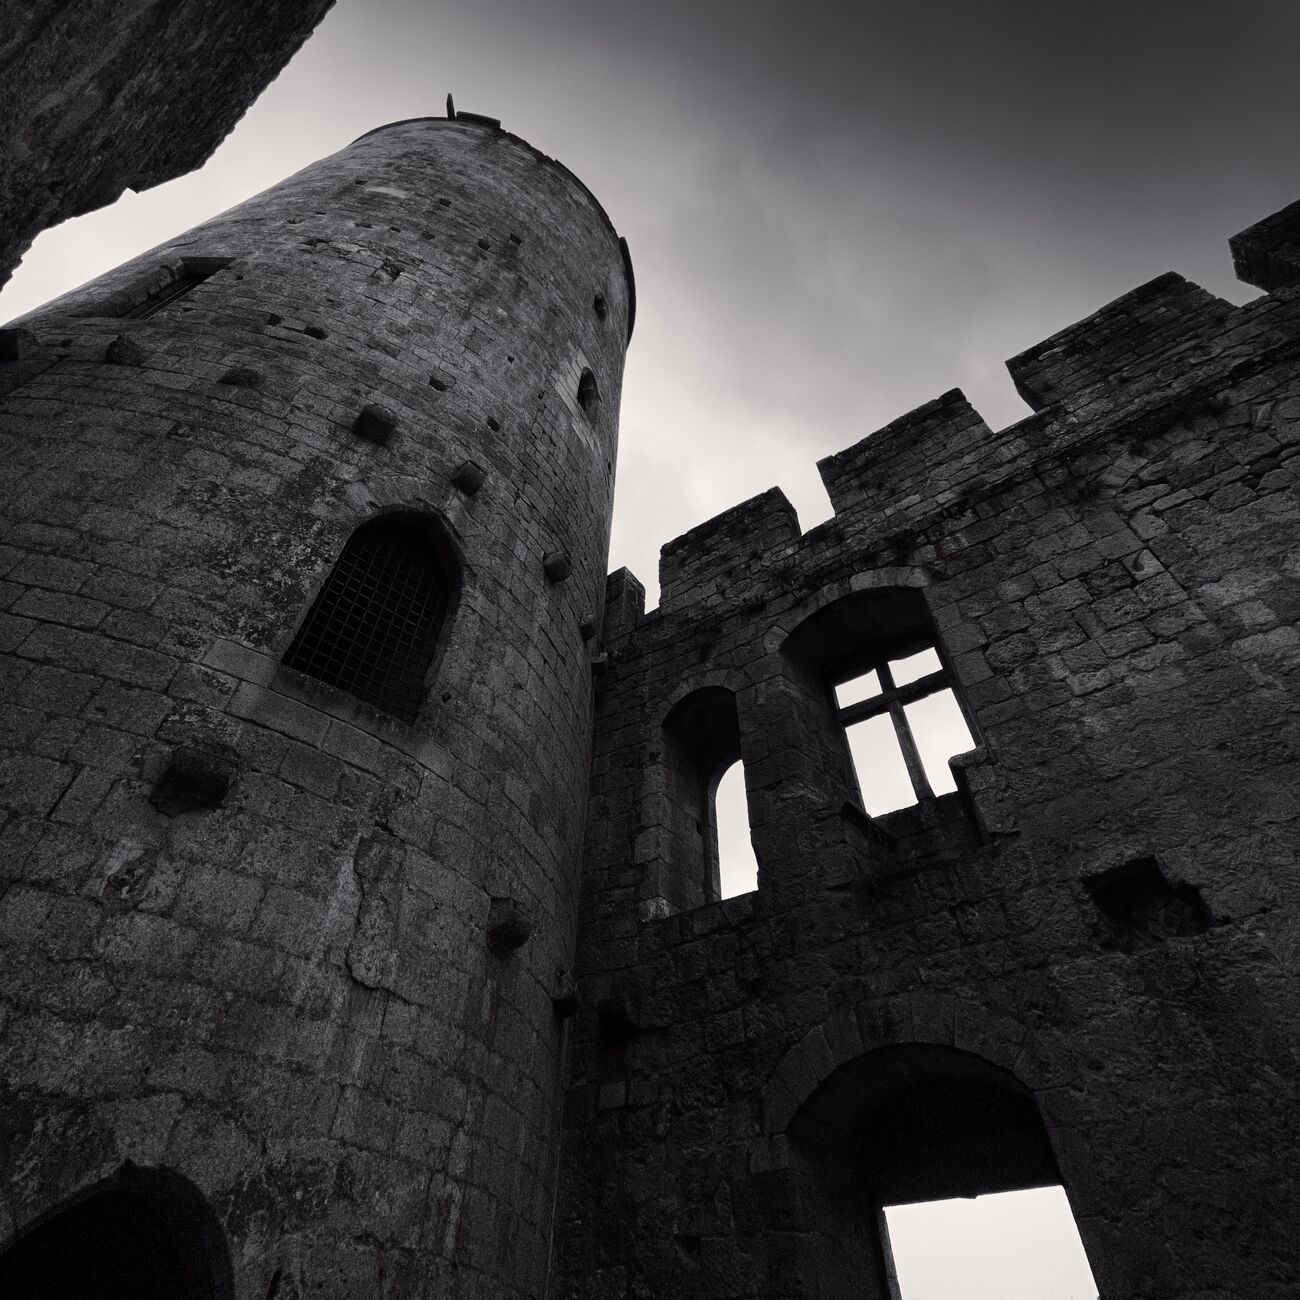 Rauzan Castle, Rauzan, France. October 2022. Ref-11589 - Denis Olivier Photography